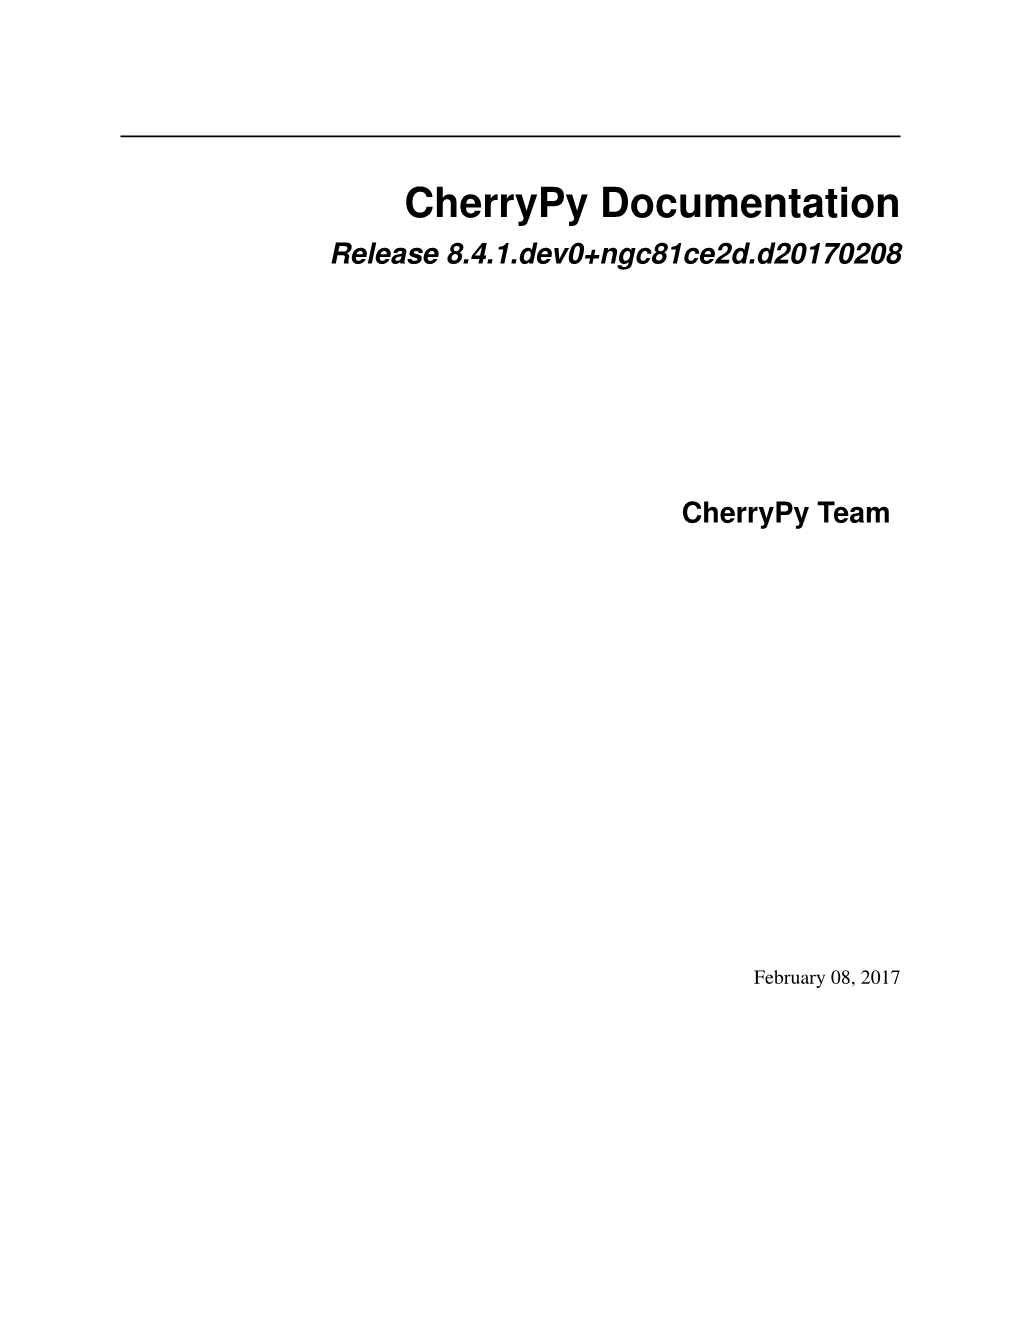 Cherrypy Documentation Release 8.4.1.Dev0+Ngc81ce2d.D20170208